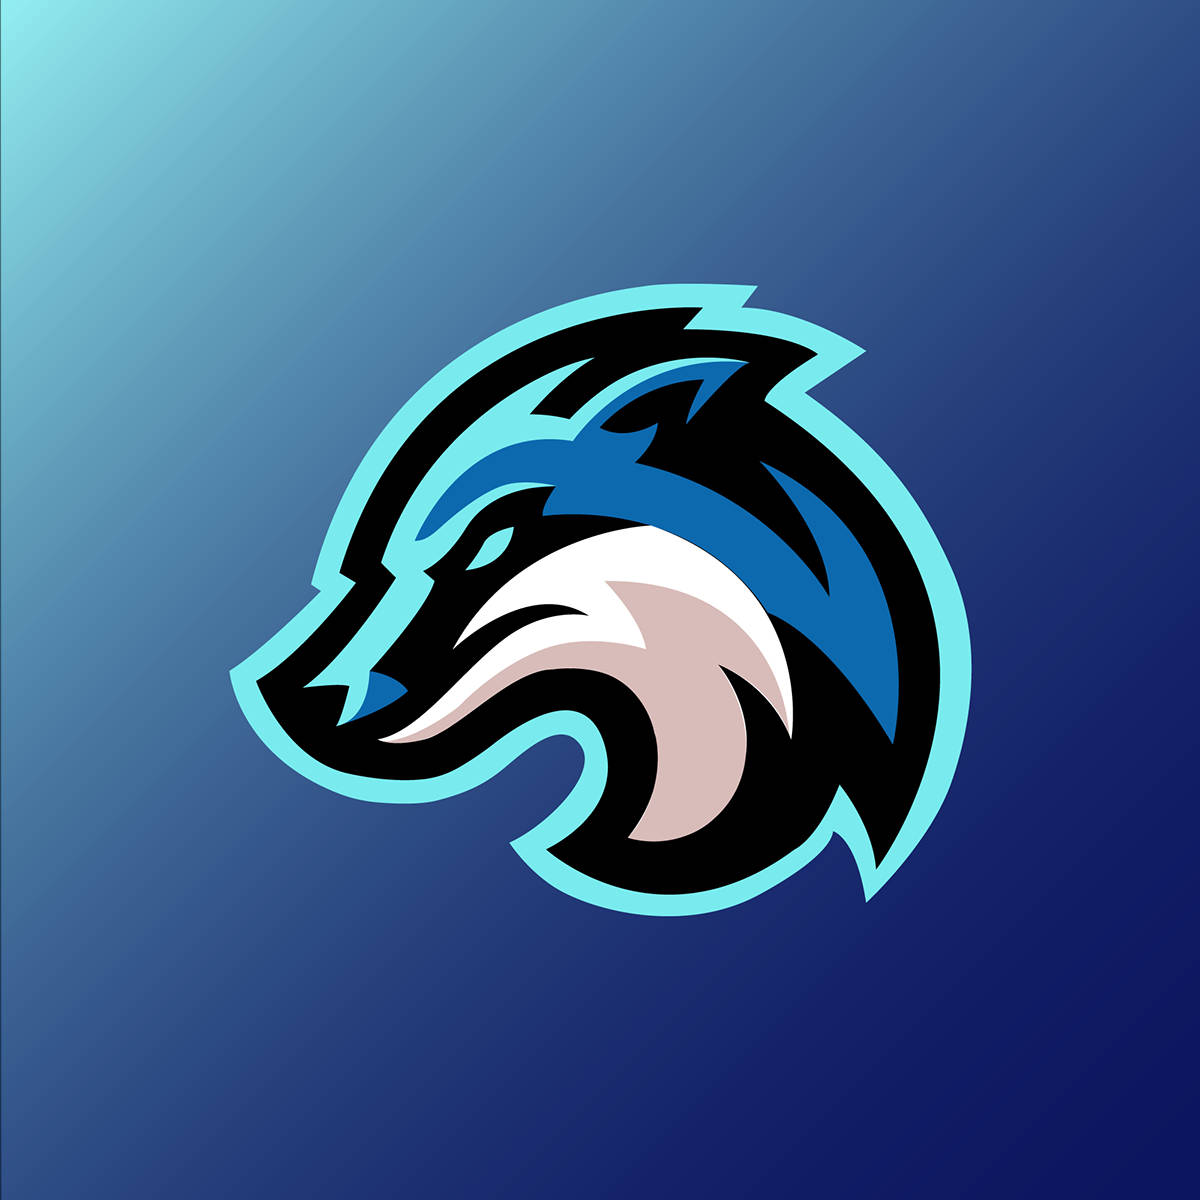 Caption: Stunning Blue Wolf Digital Logo Wallpaper